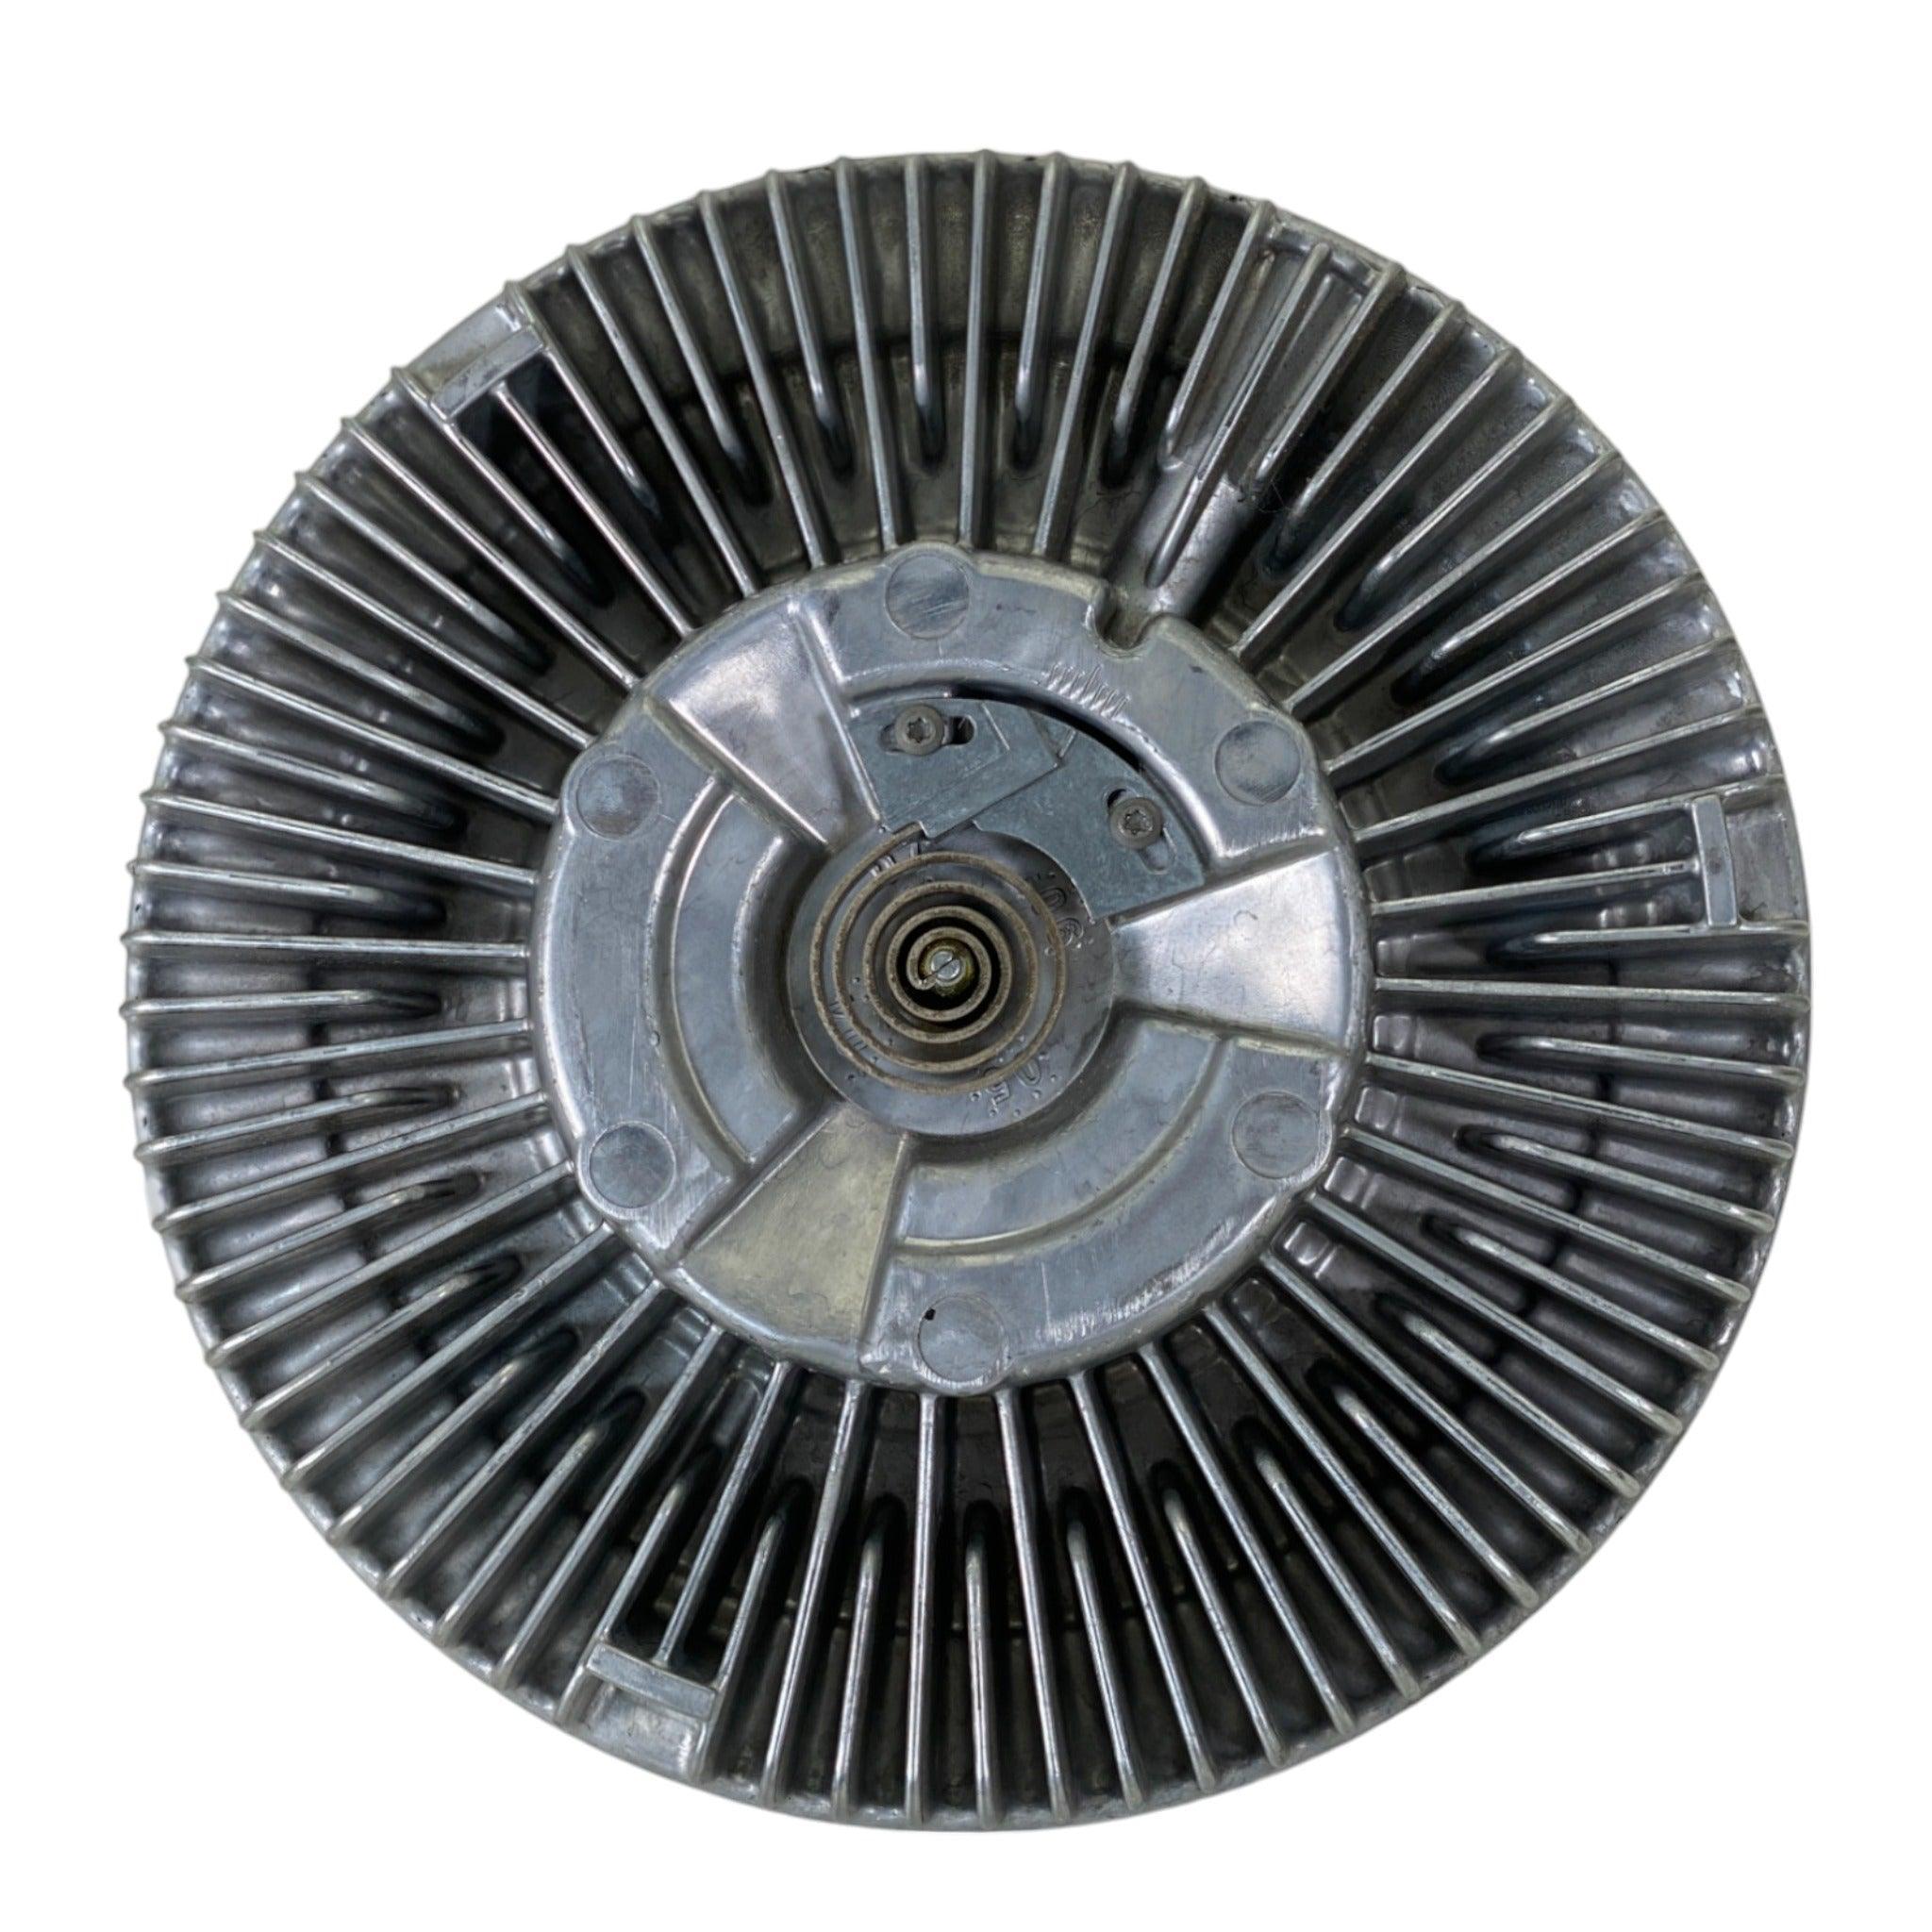 3522788C3 Genuine International Engine Fan Clutch For Dt466 Series Engines - ADVANCED TRUCK PARTS